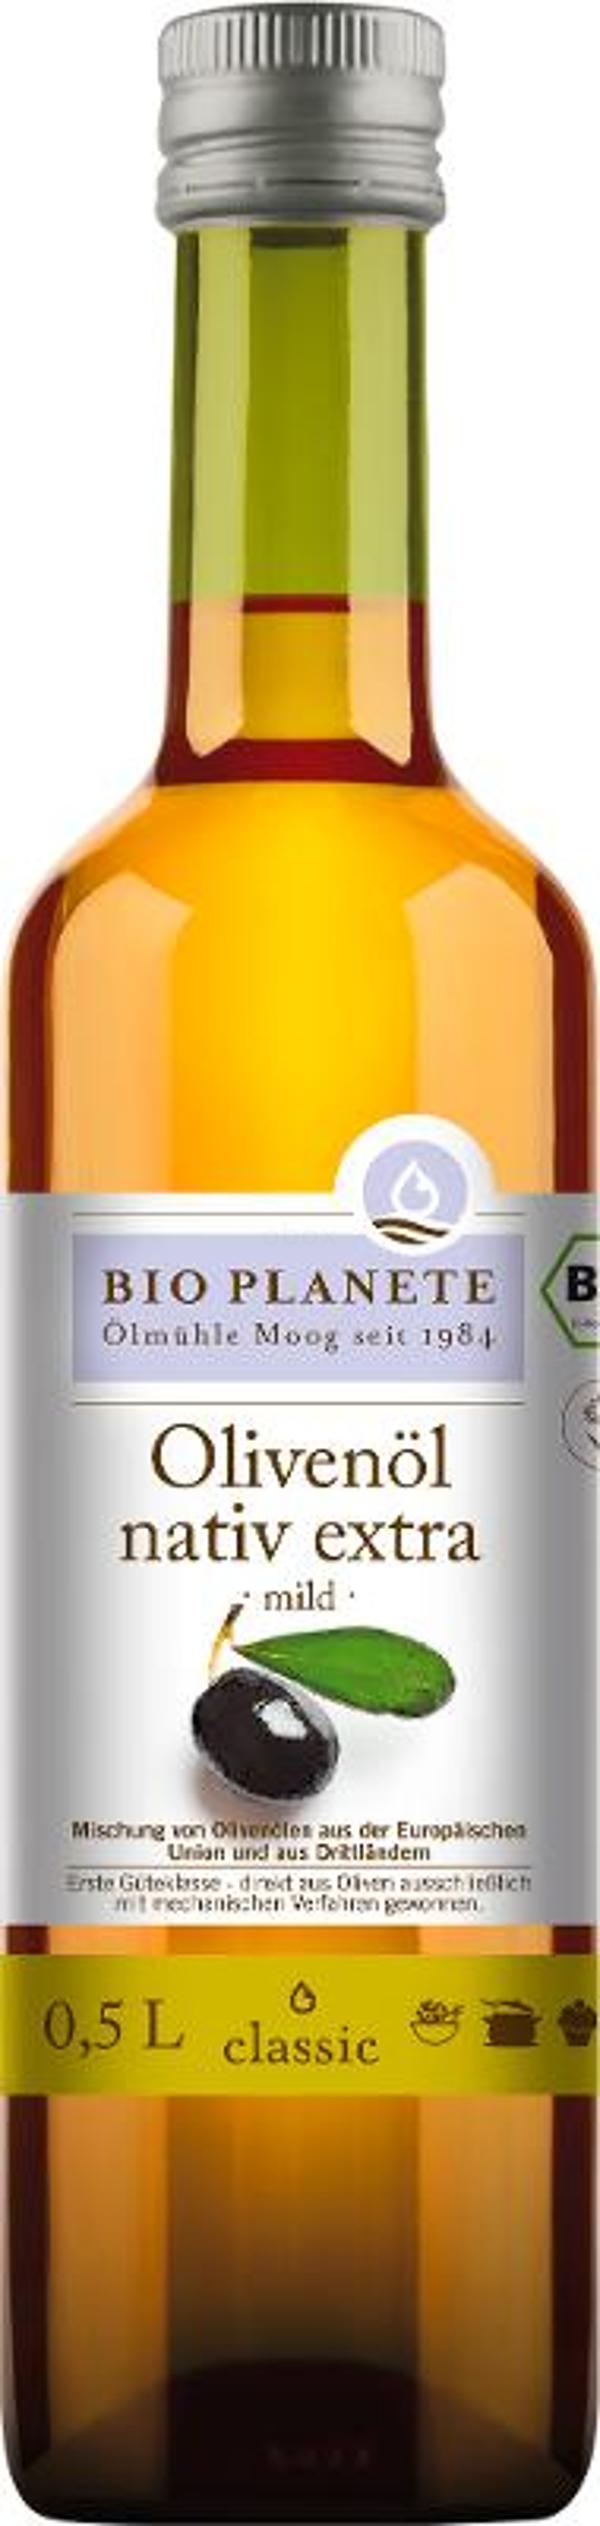 Produktfoto zu Bio Planete Olivenöl mild - 0,5l